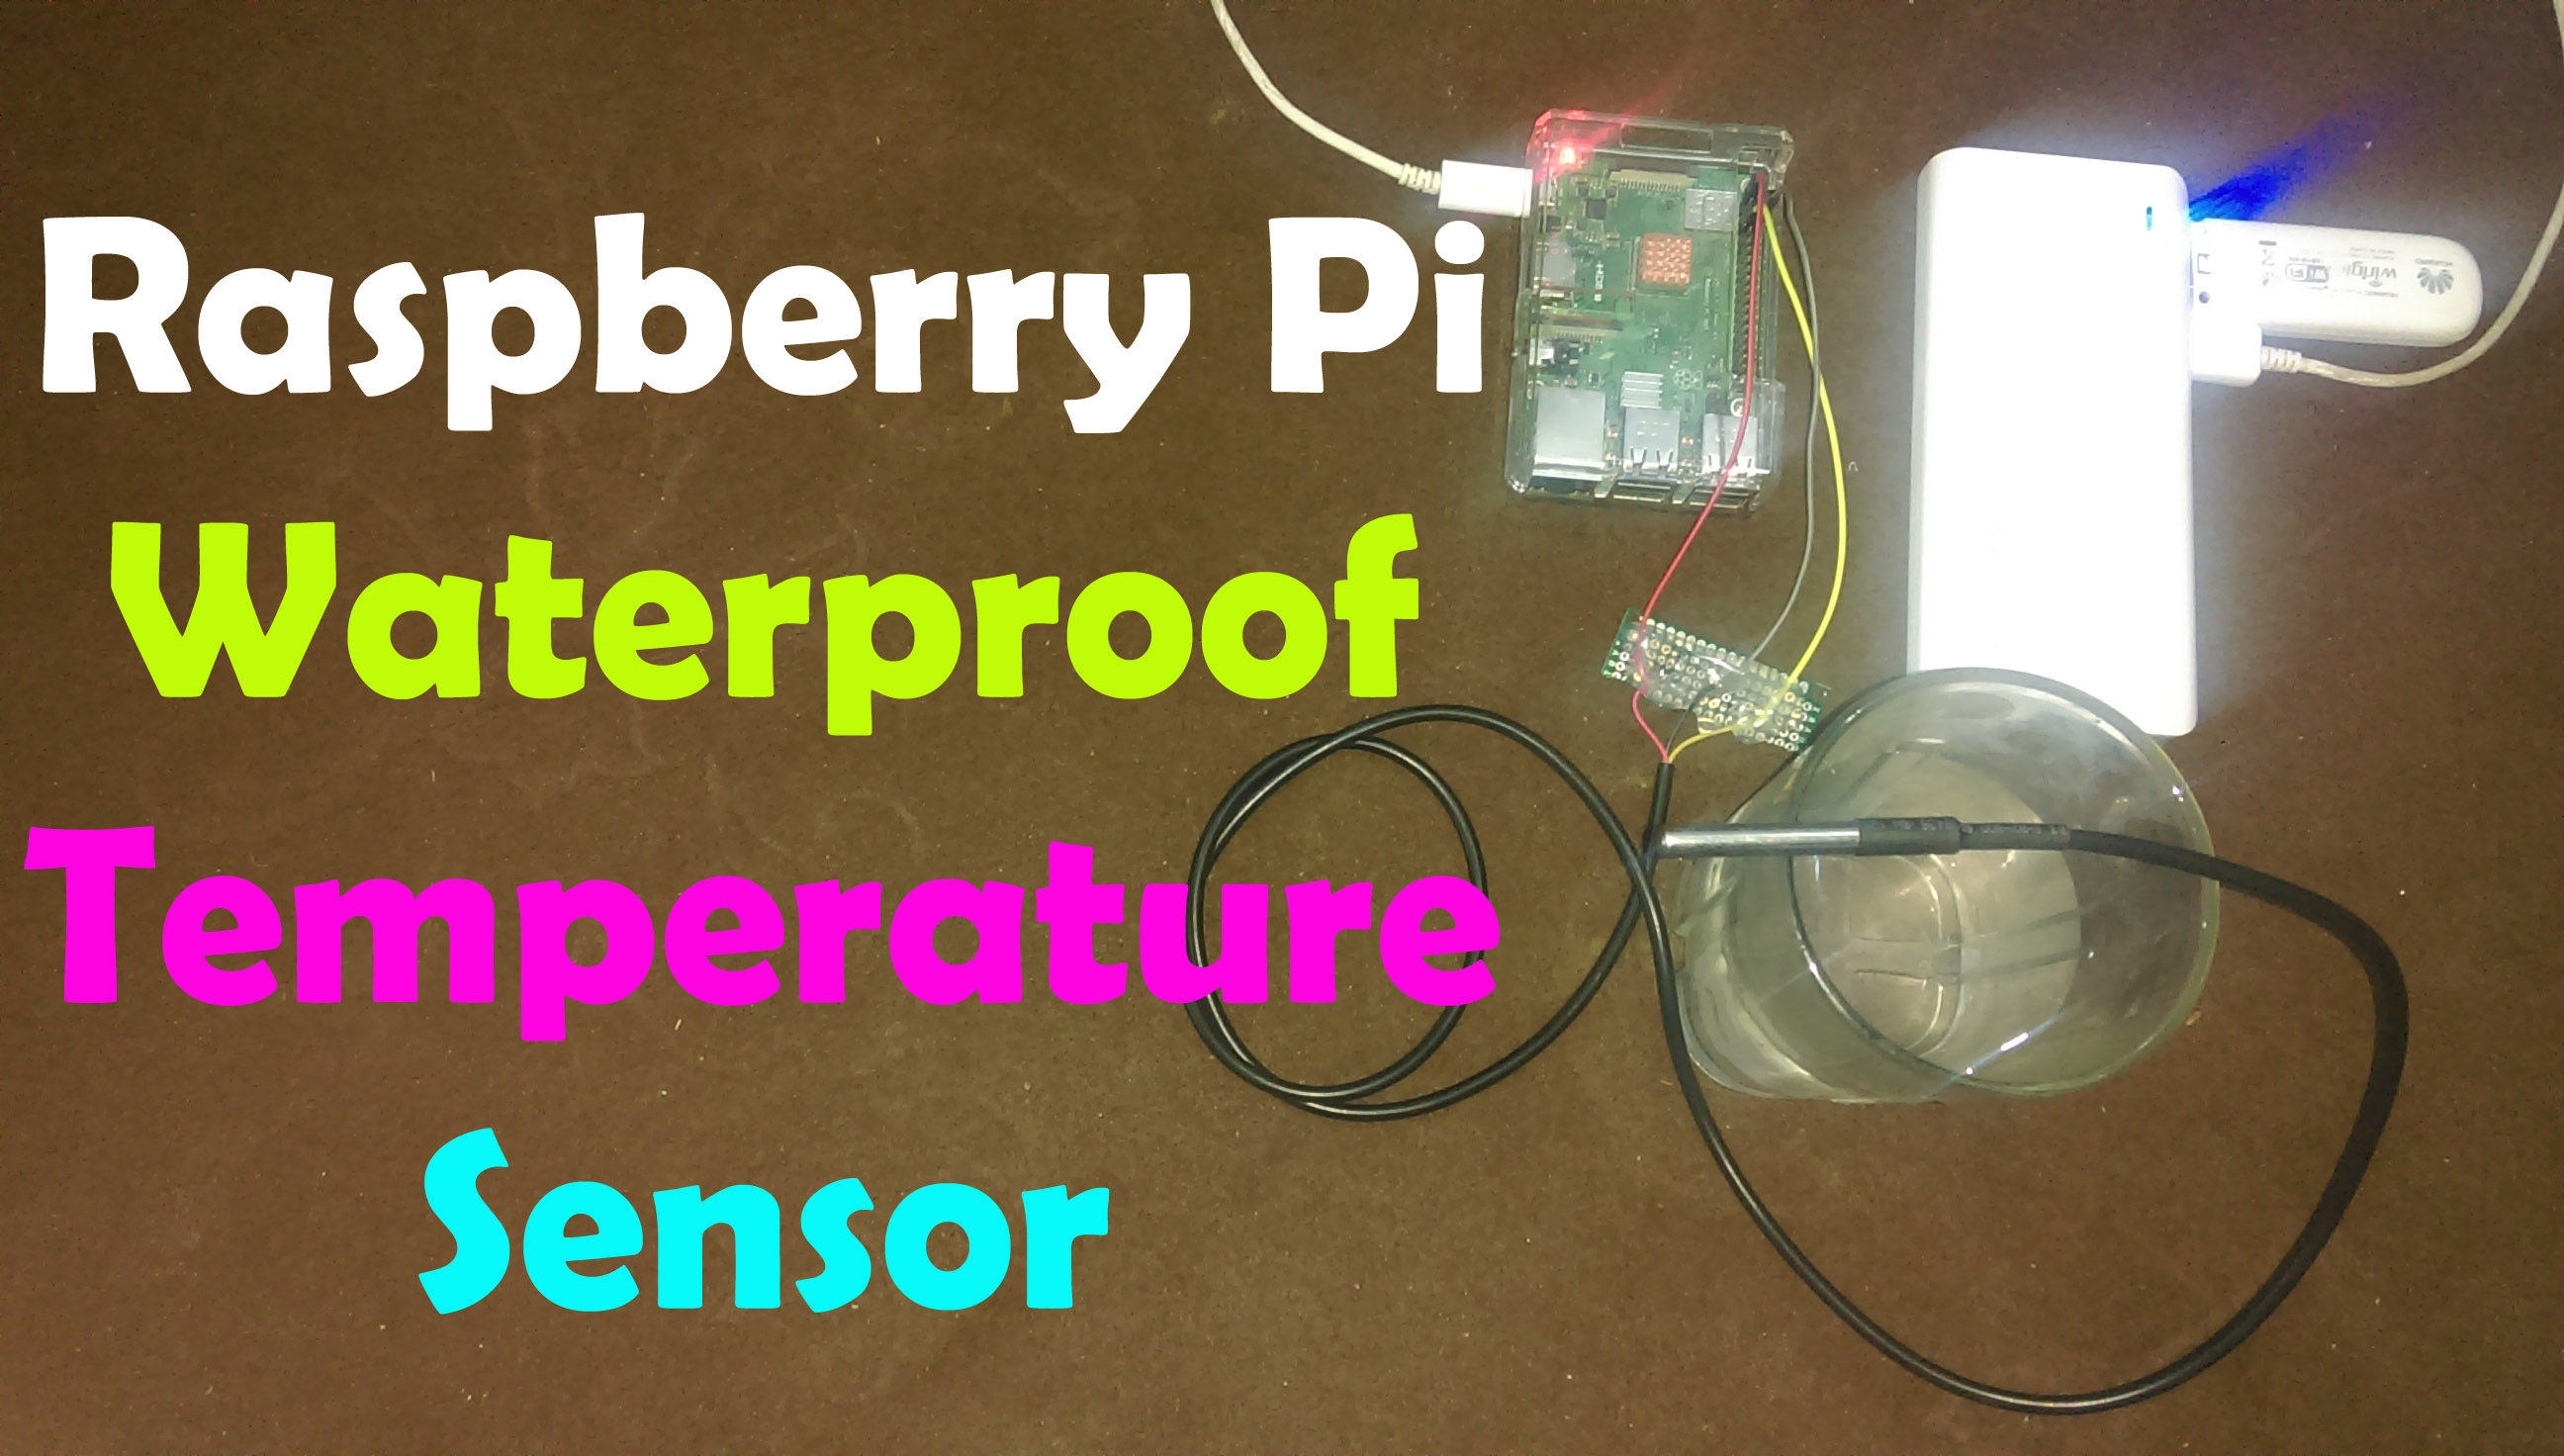 Raspberry Pi DS18B20